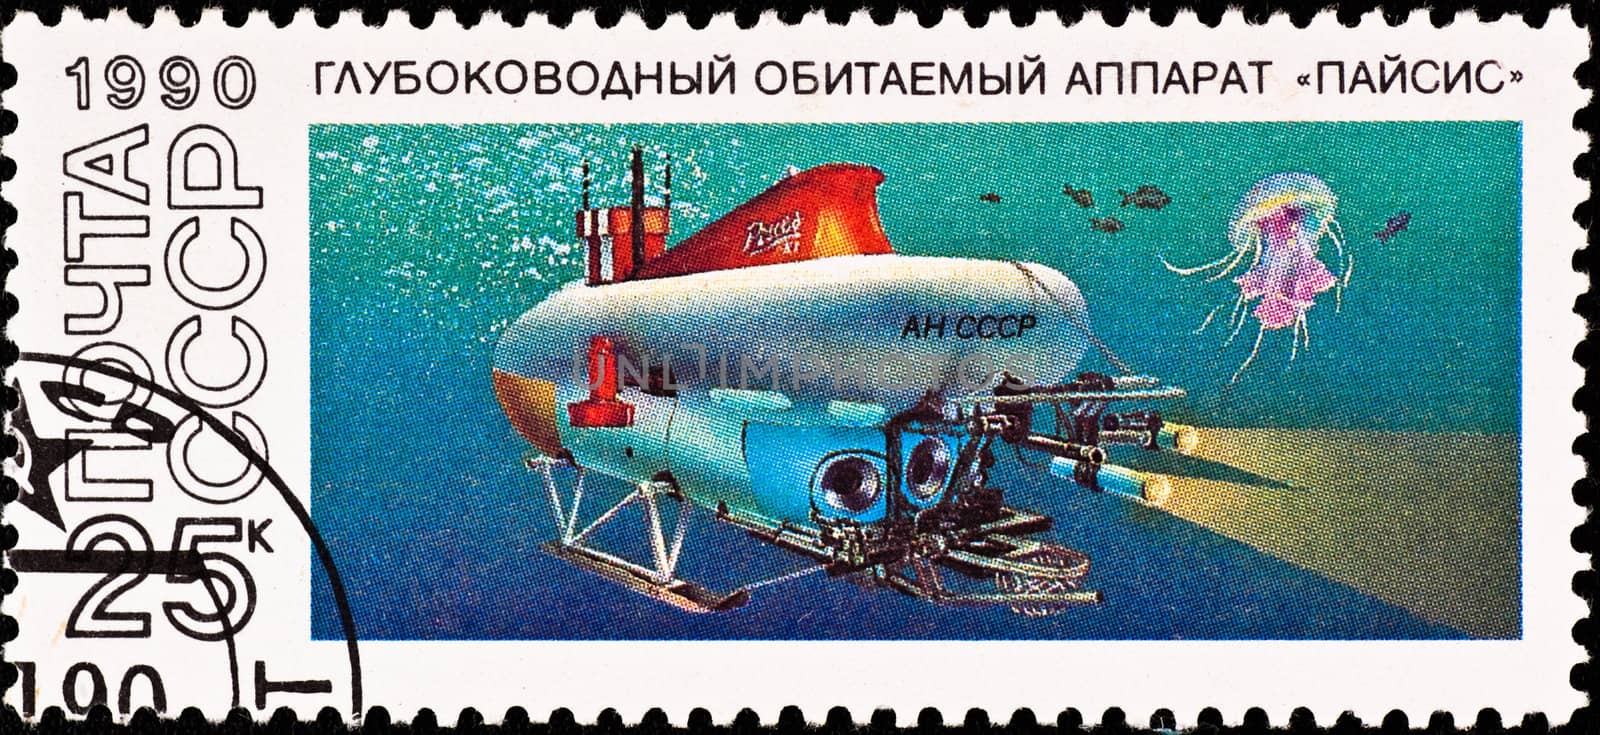 postage stamp shows submarine "Paysis" by petr_malyshev